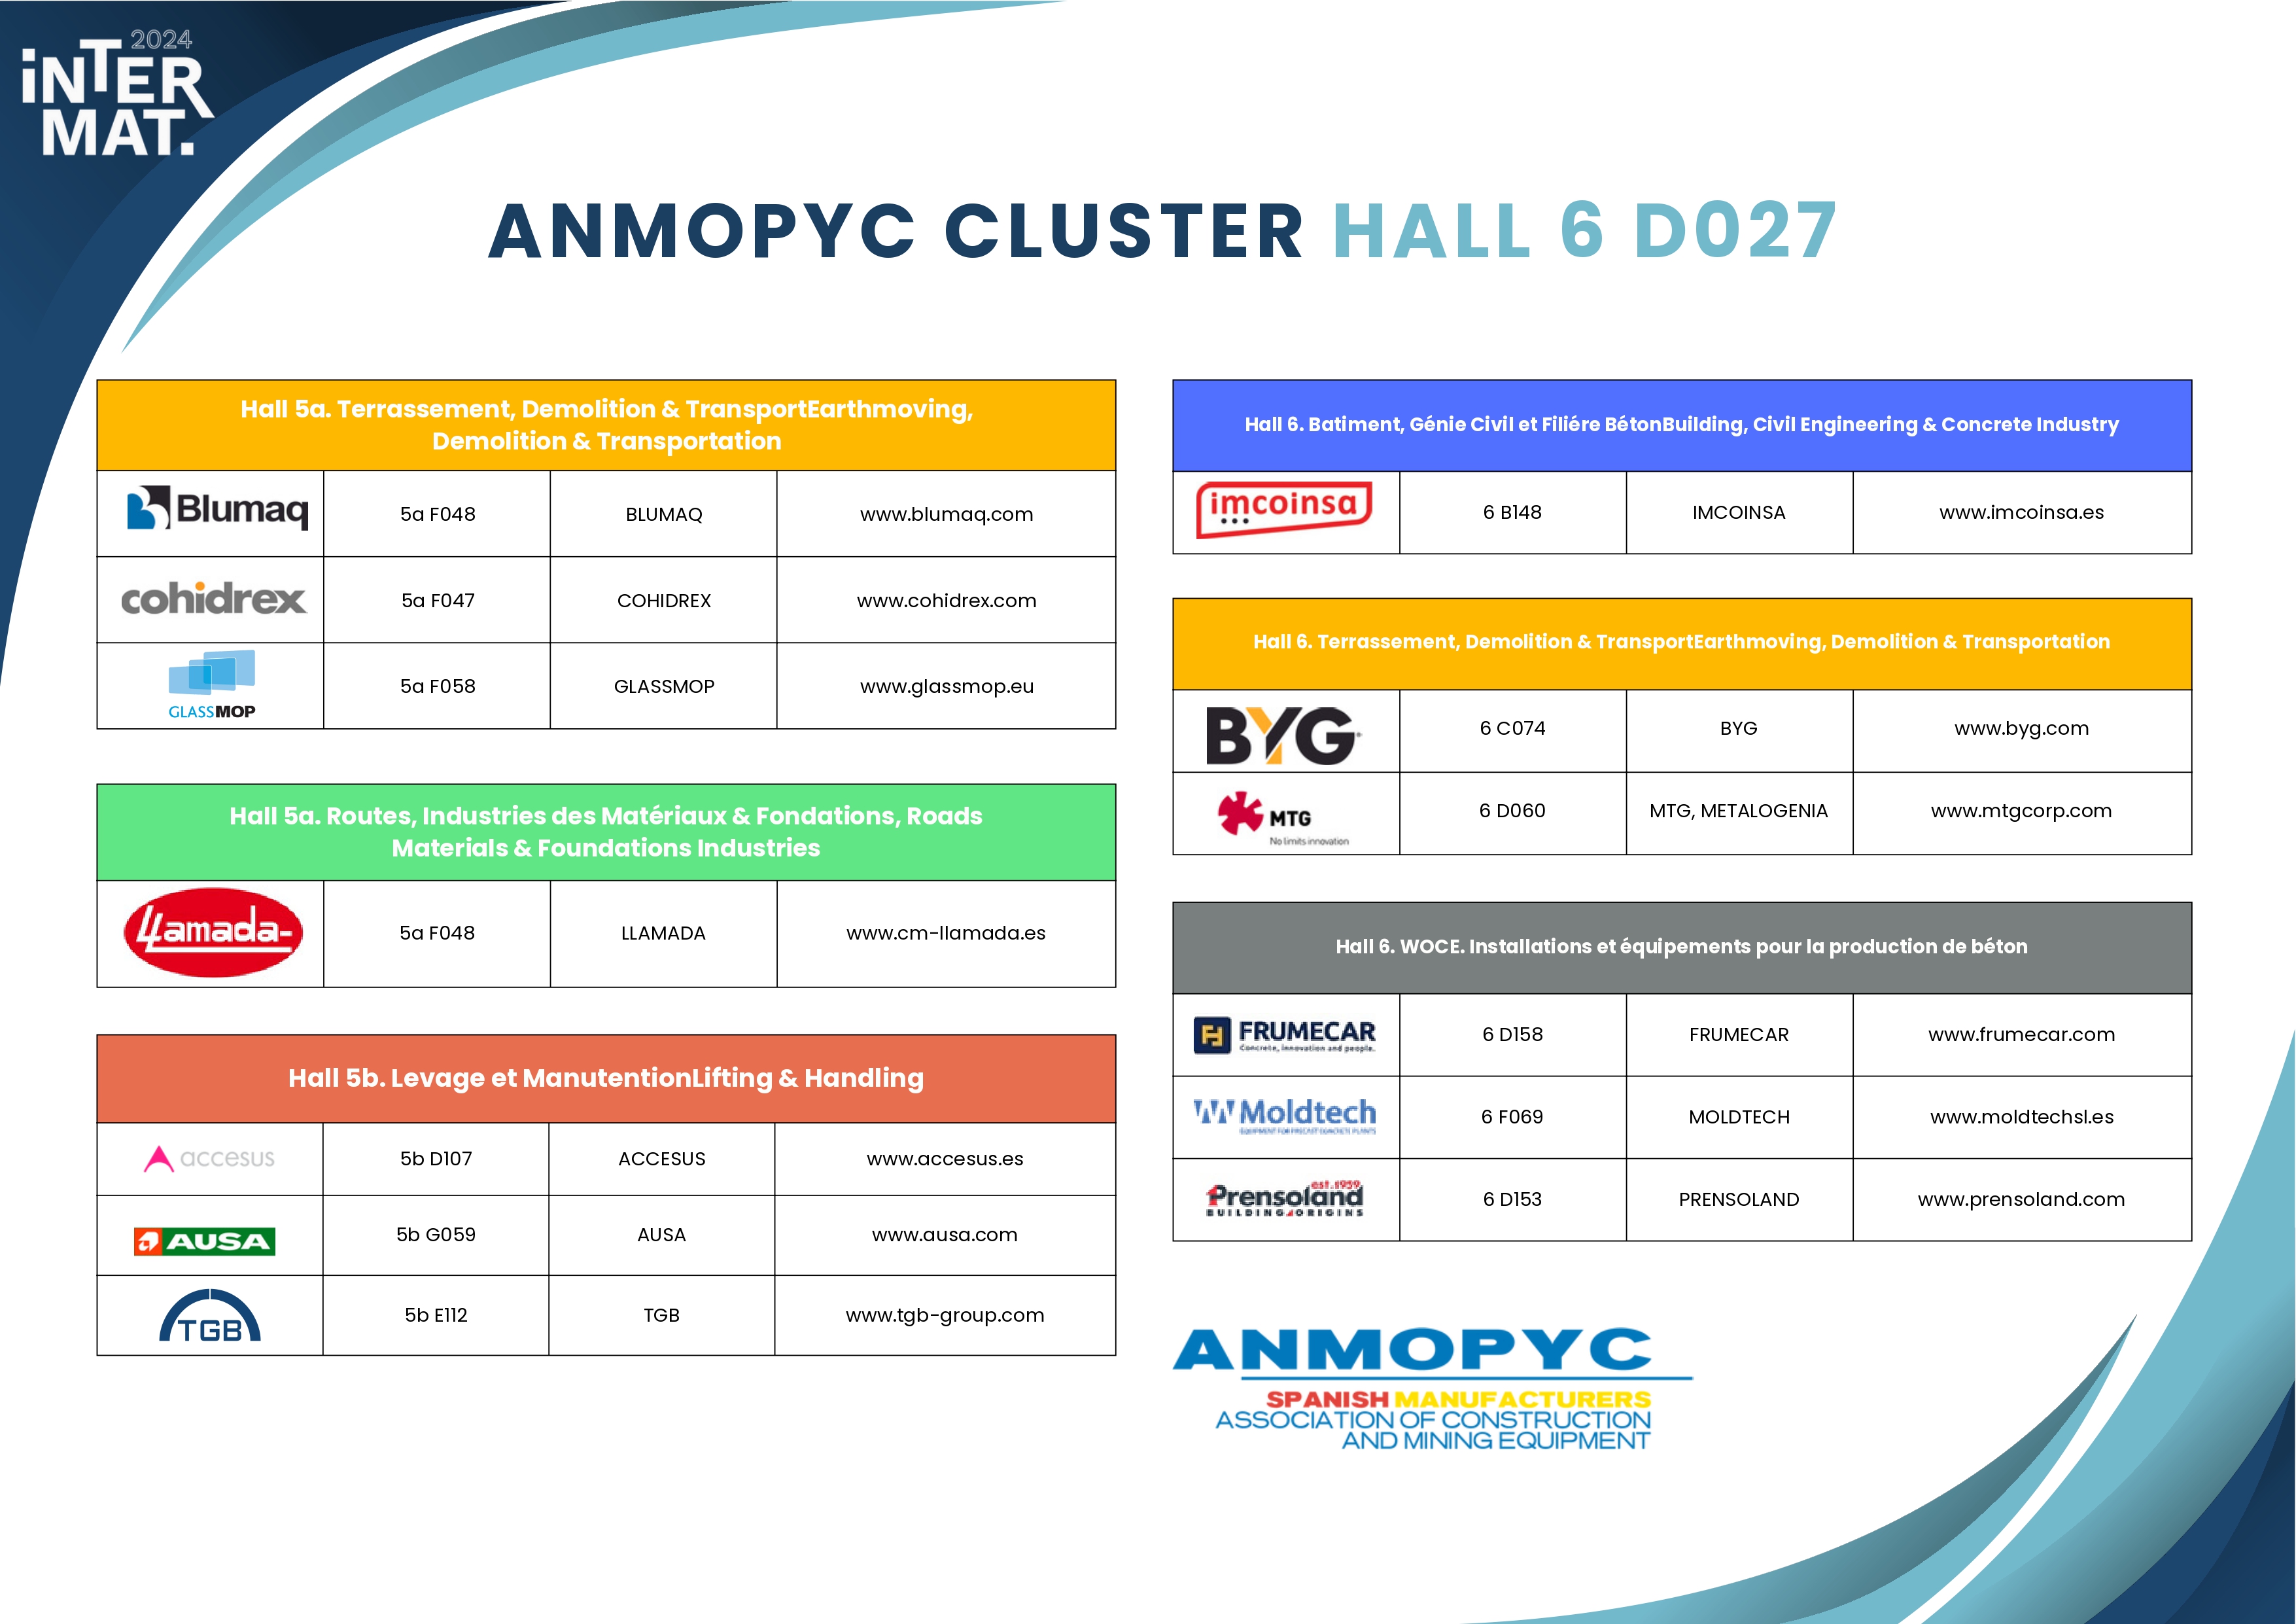 ANMOPYC Cluster at INTERMAT 2024